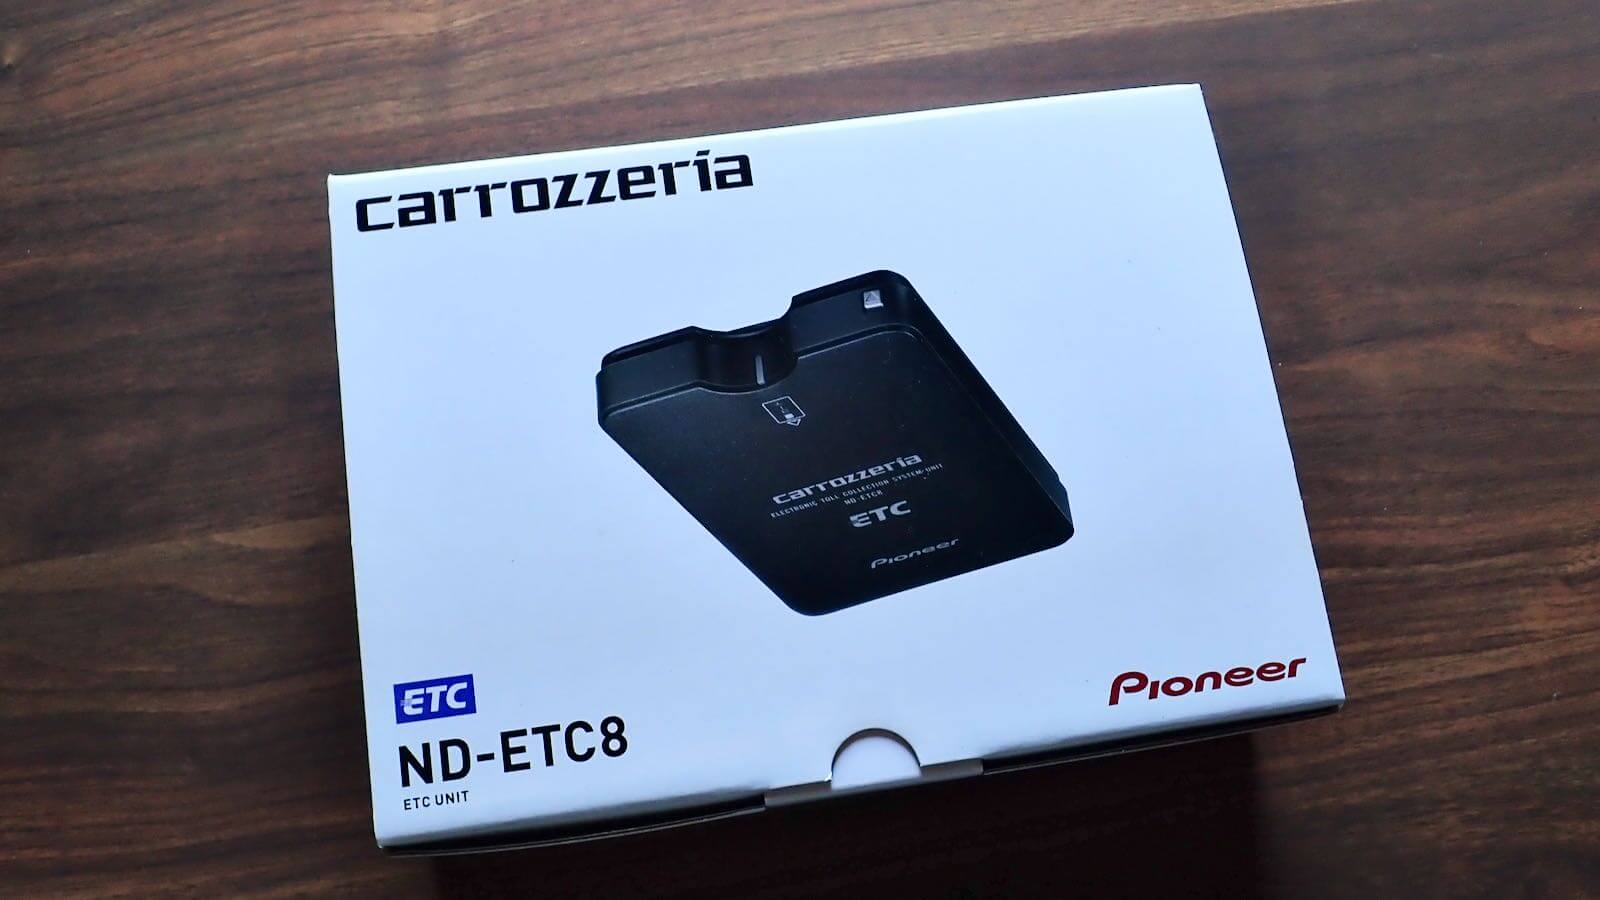 carrozzeria ND-ETC8 packing box